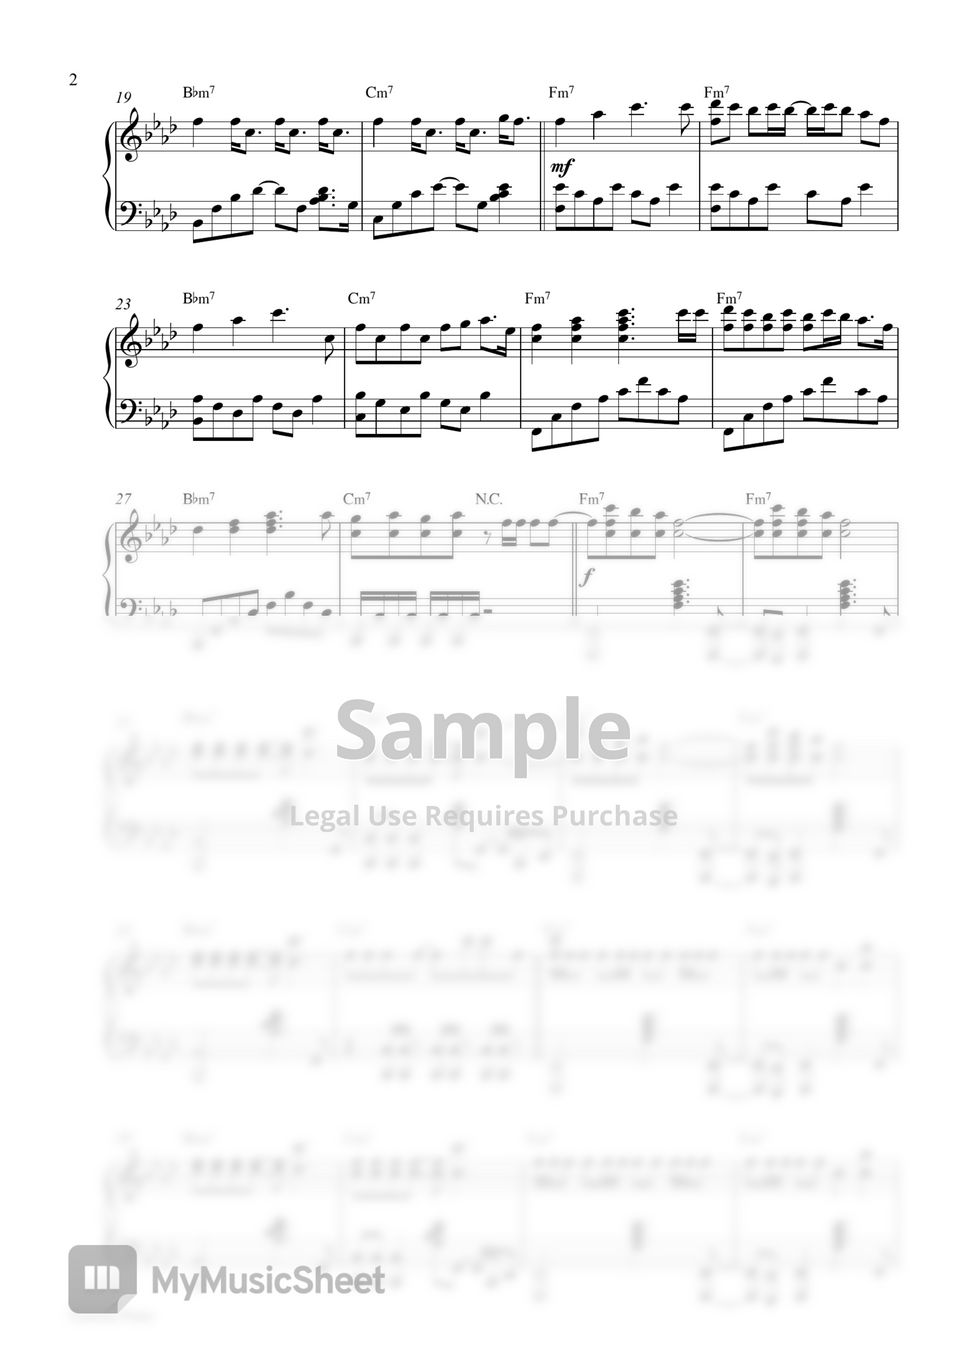 TXT - Sugar Rush Ride (Piano Sheet) by Pianella Piano